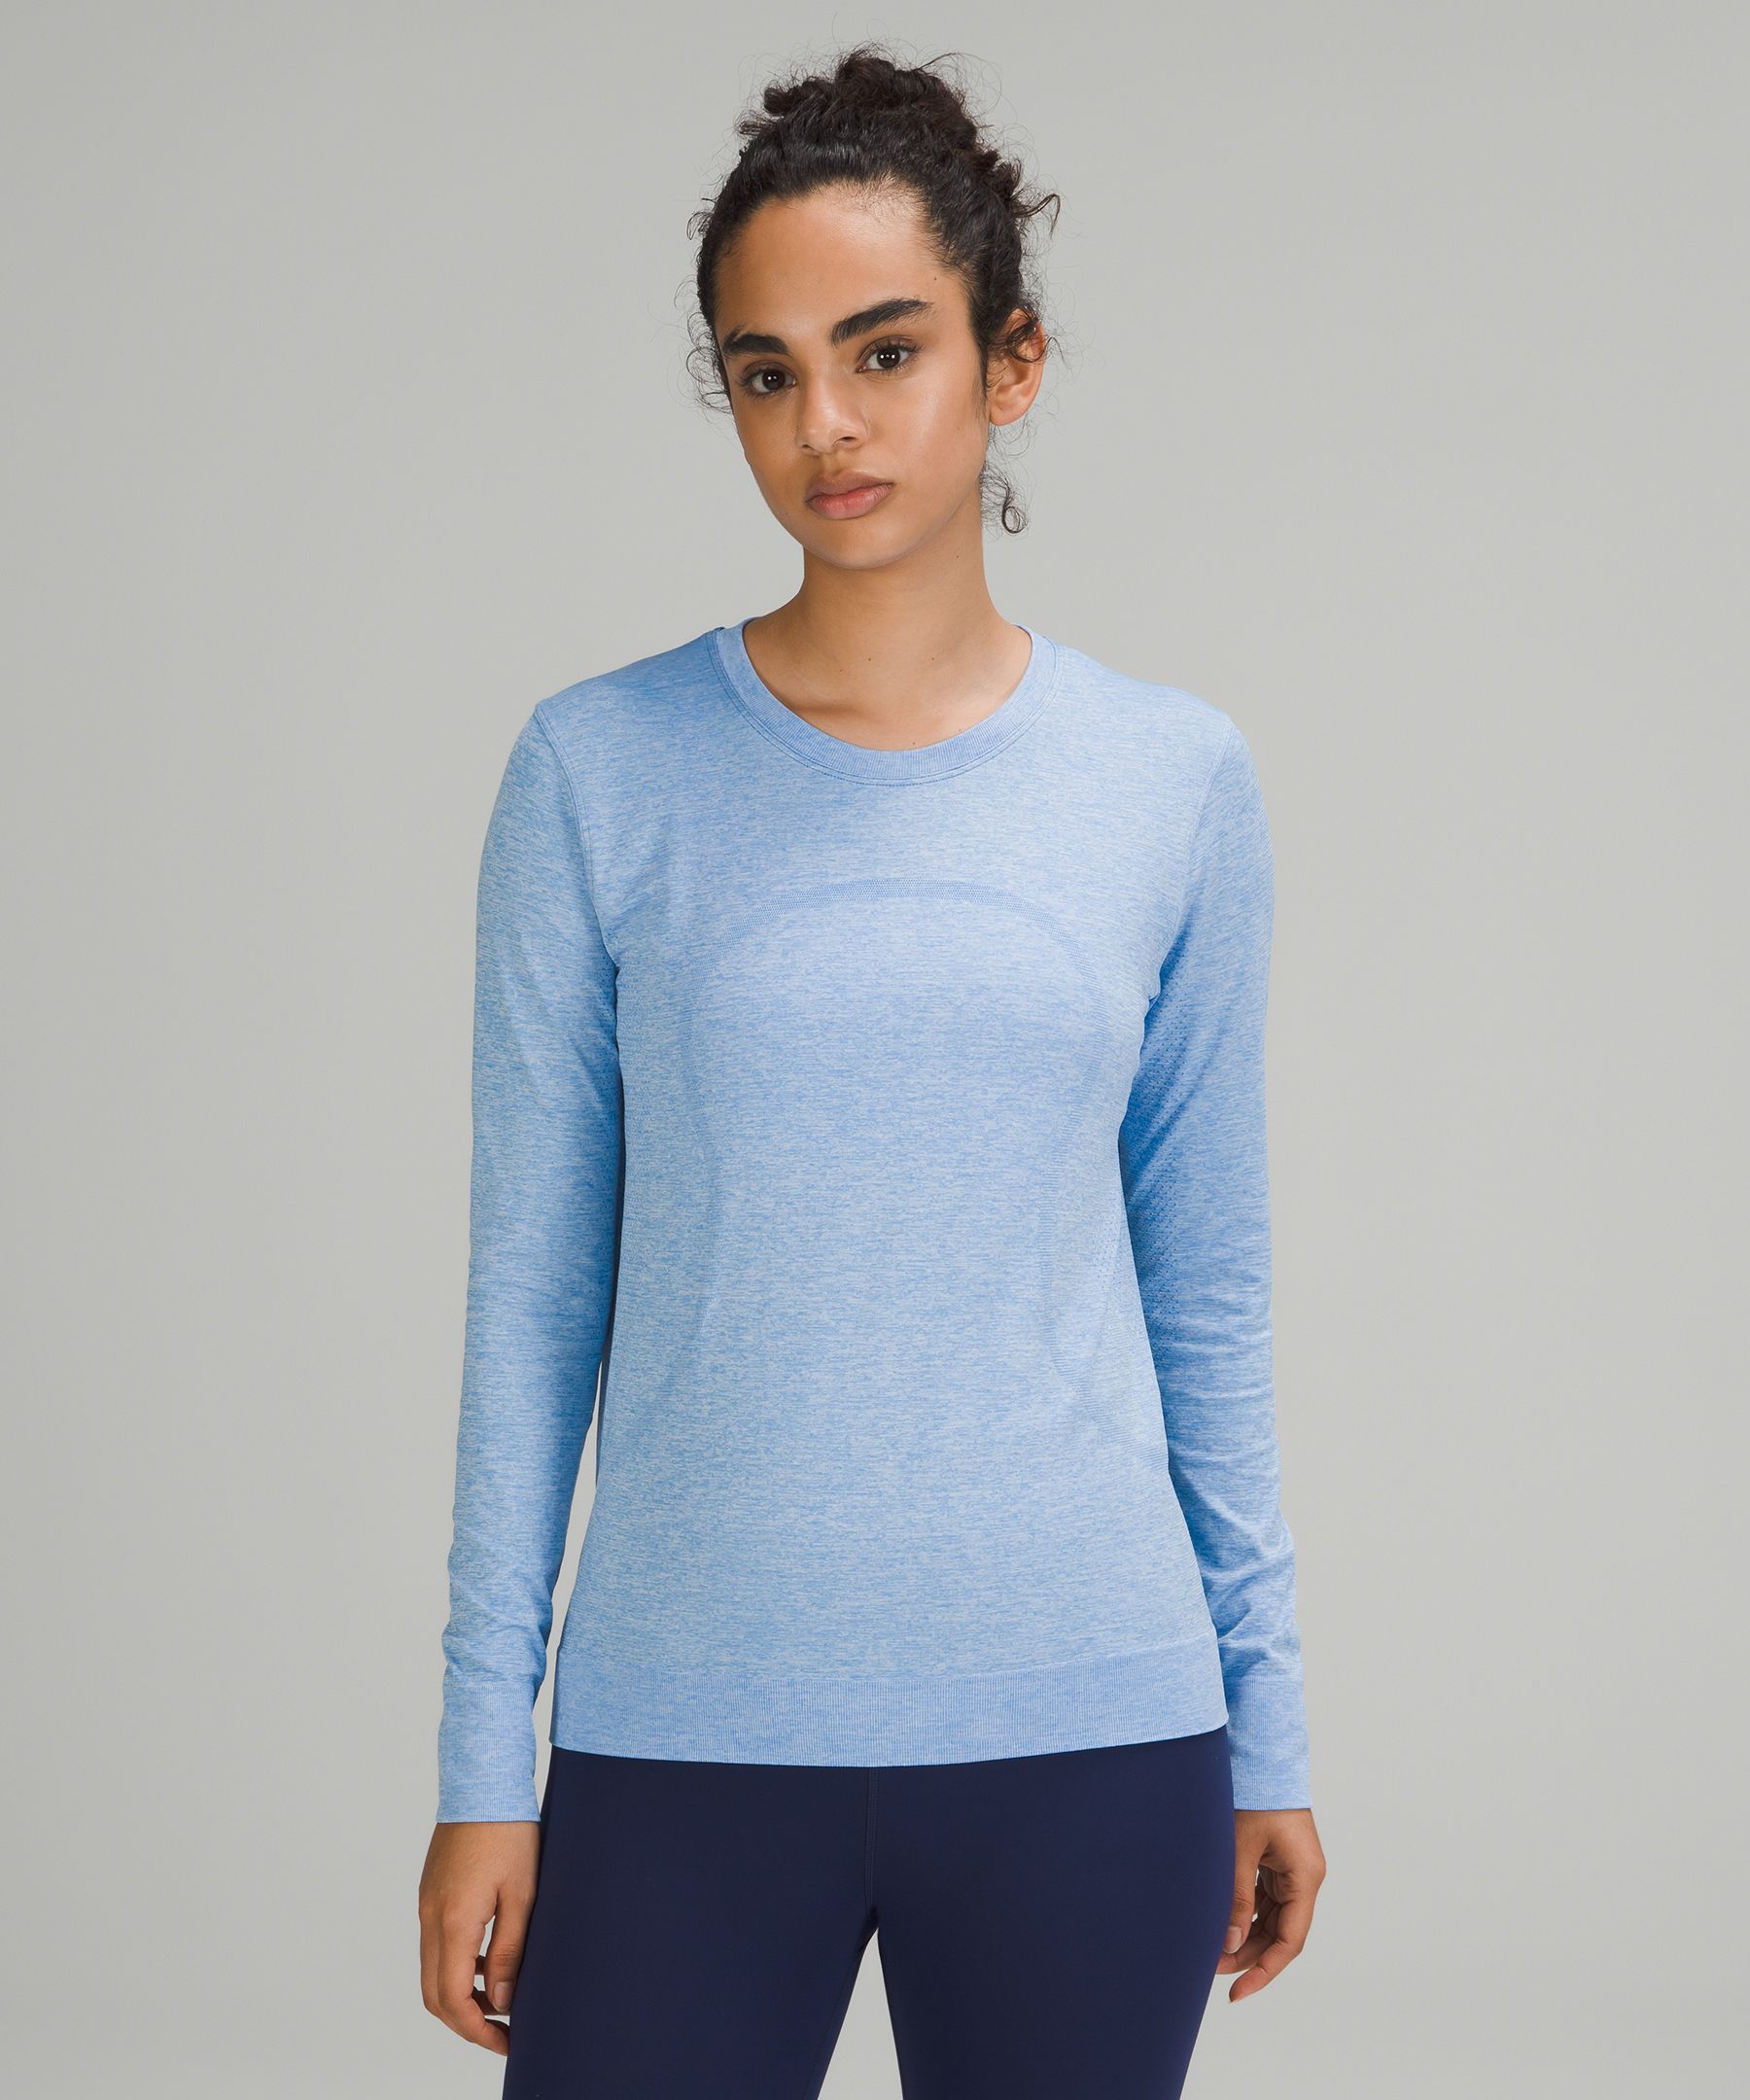 Lululemon Swiftly Relaxed Long Sleeve Shirt 2.0 In Blue Nile/white